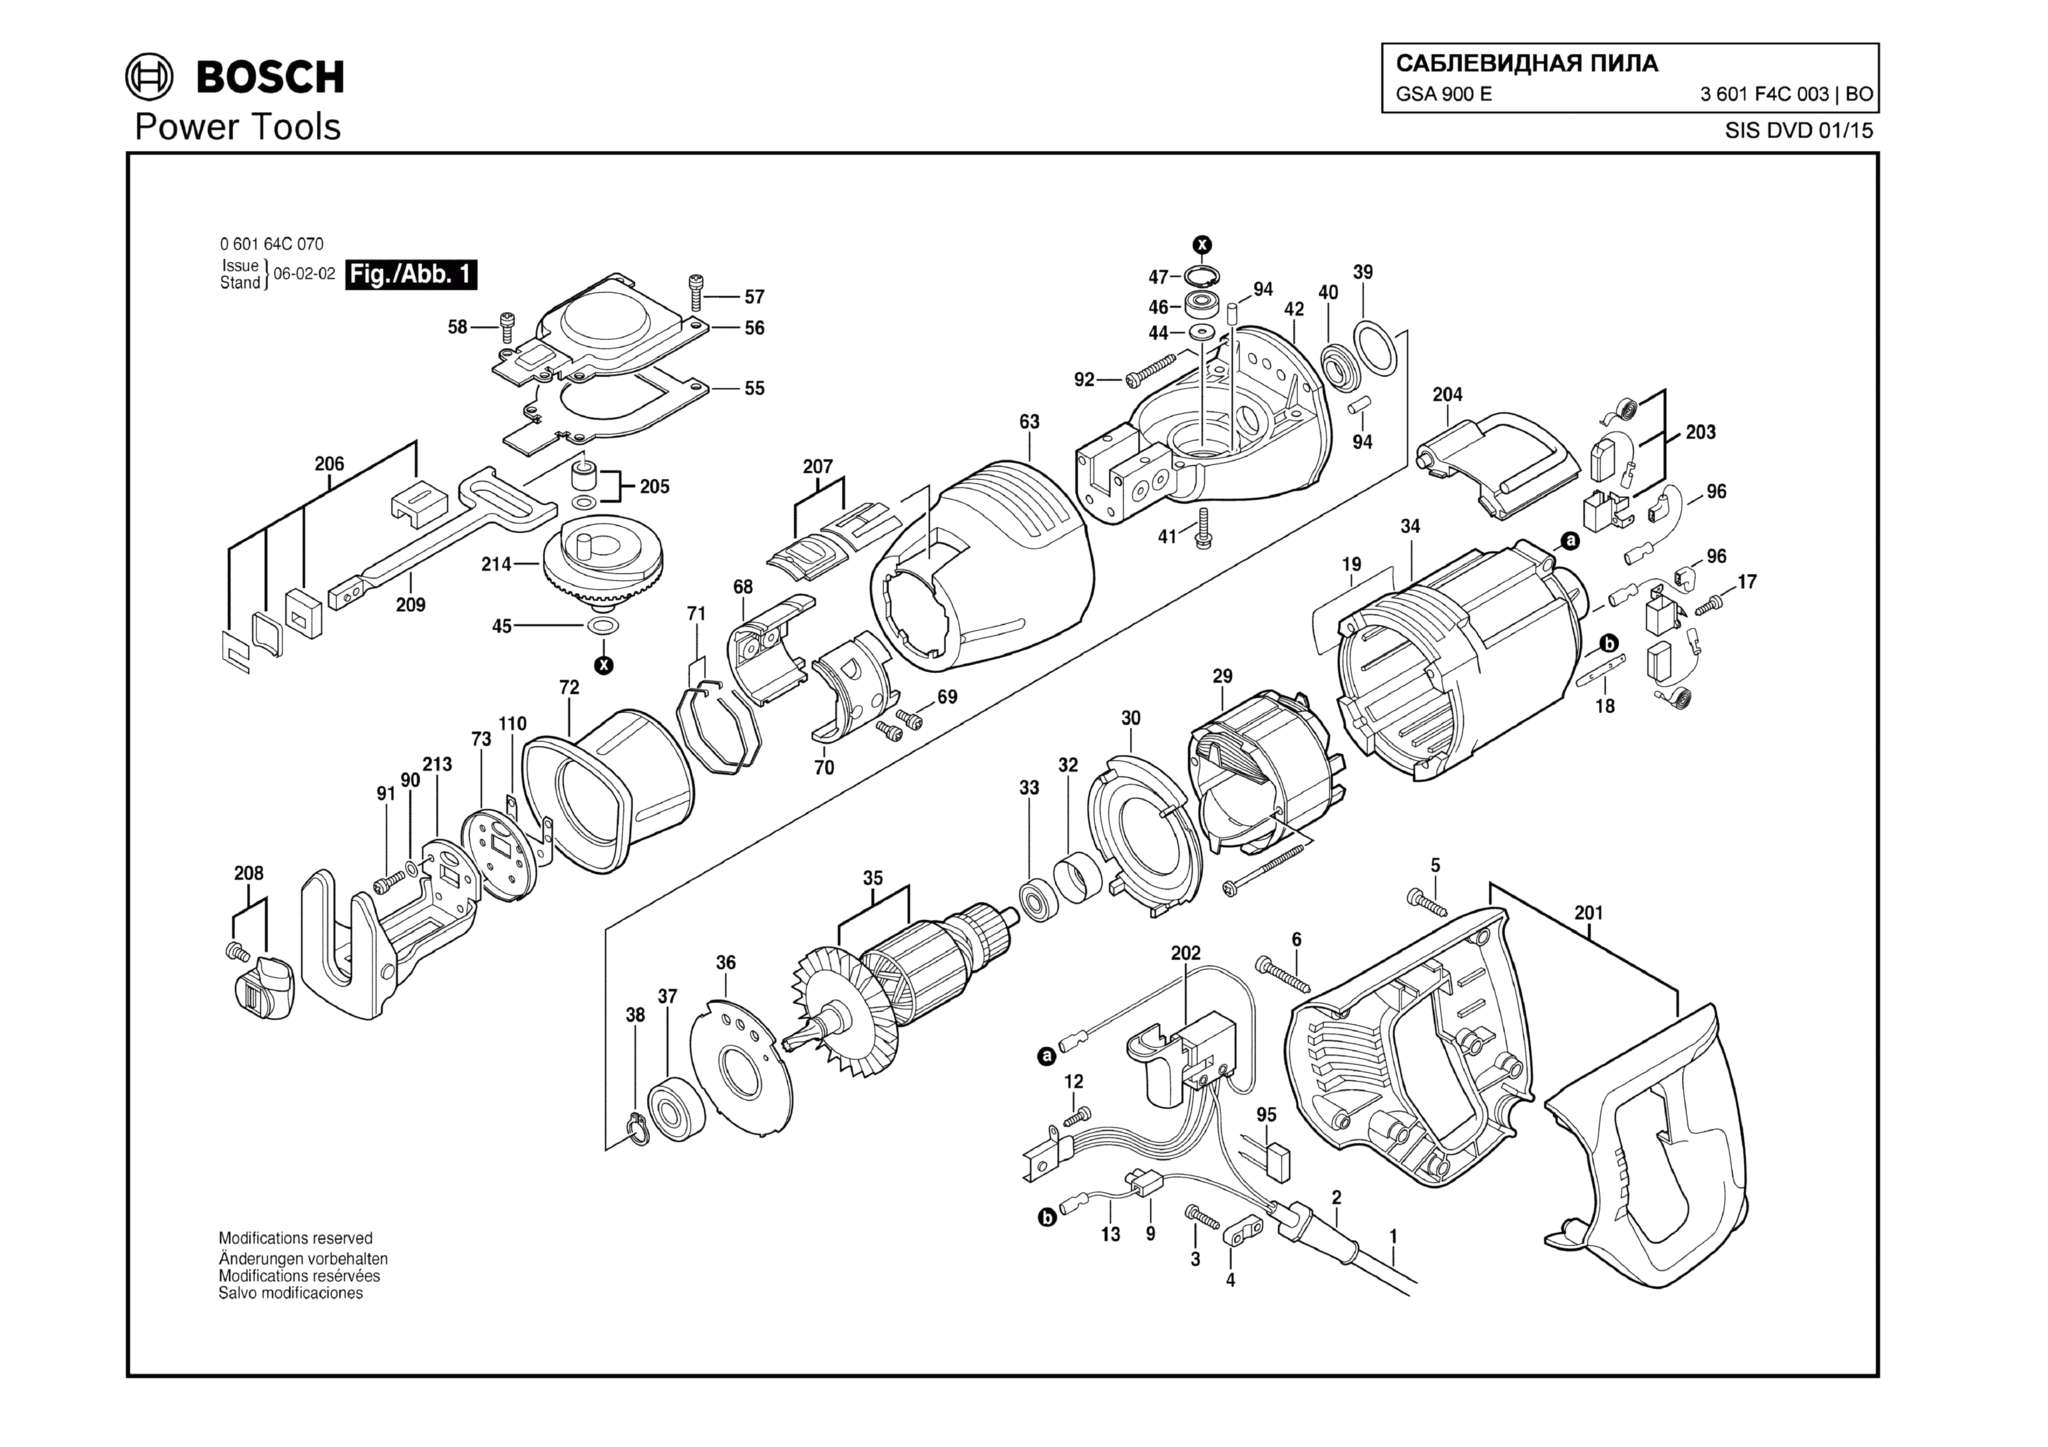 Запчасти, схема и деталировка Bosch GSA 900 E (ТИП 3601F4C003)